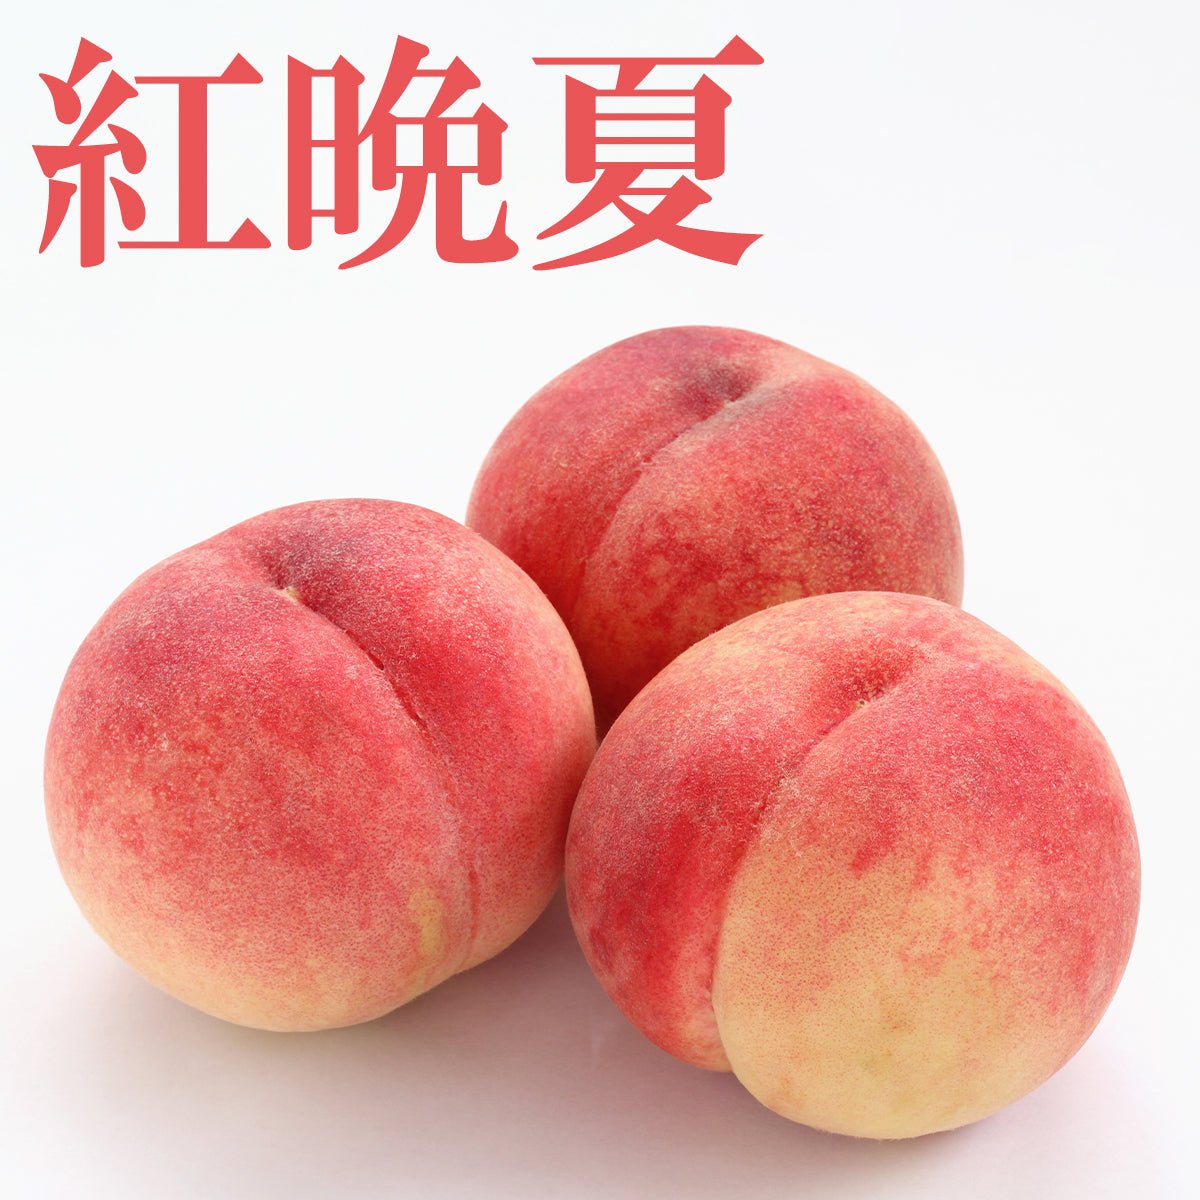 PRE-ORDER| Nagano Beni Banka Peach ("紅晩夏") - Tokyo Fresh Direct